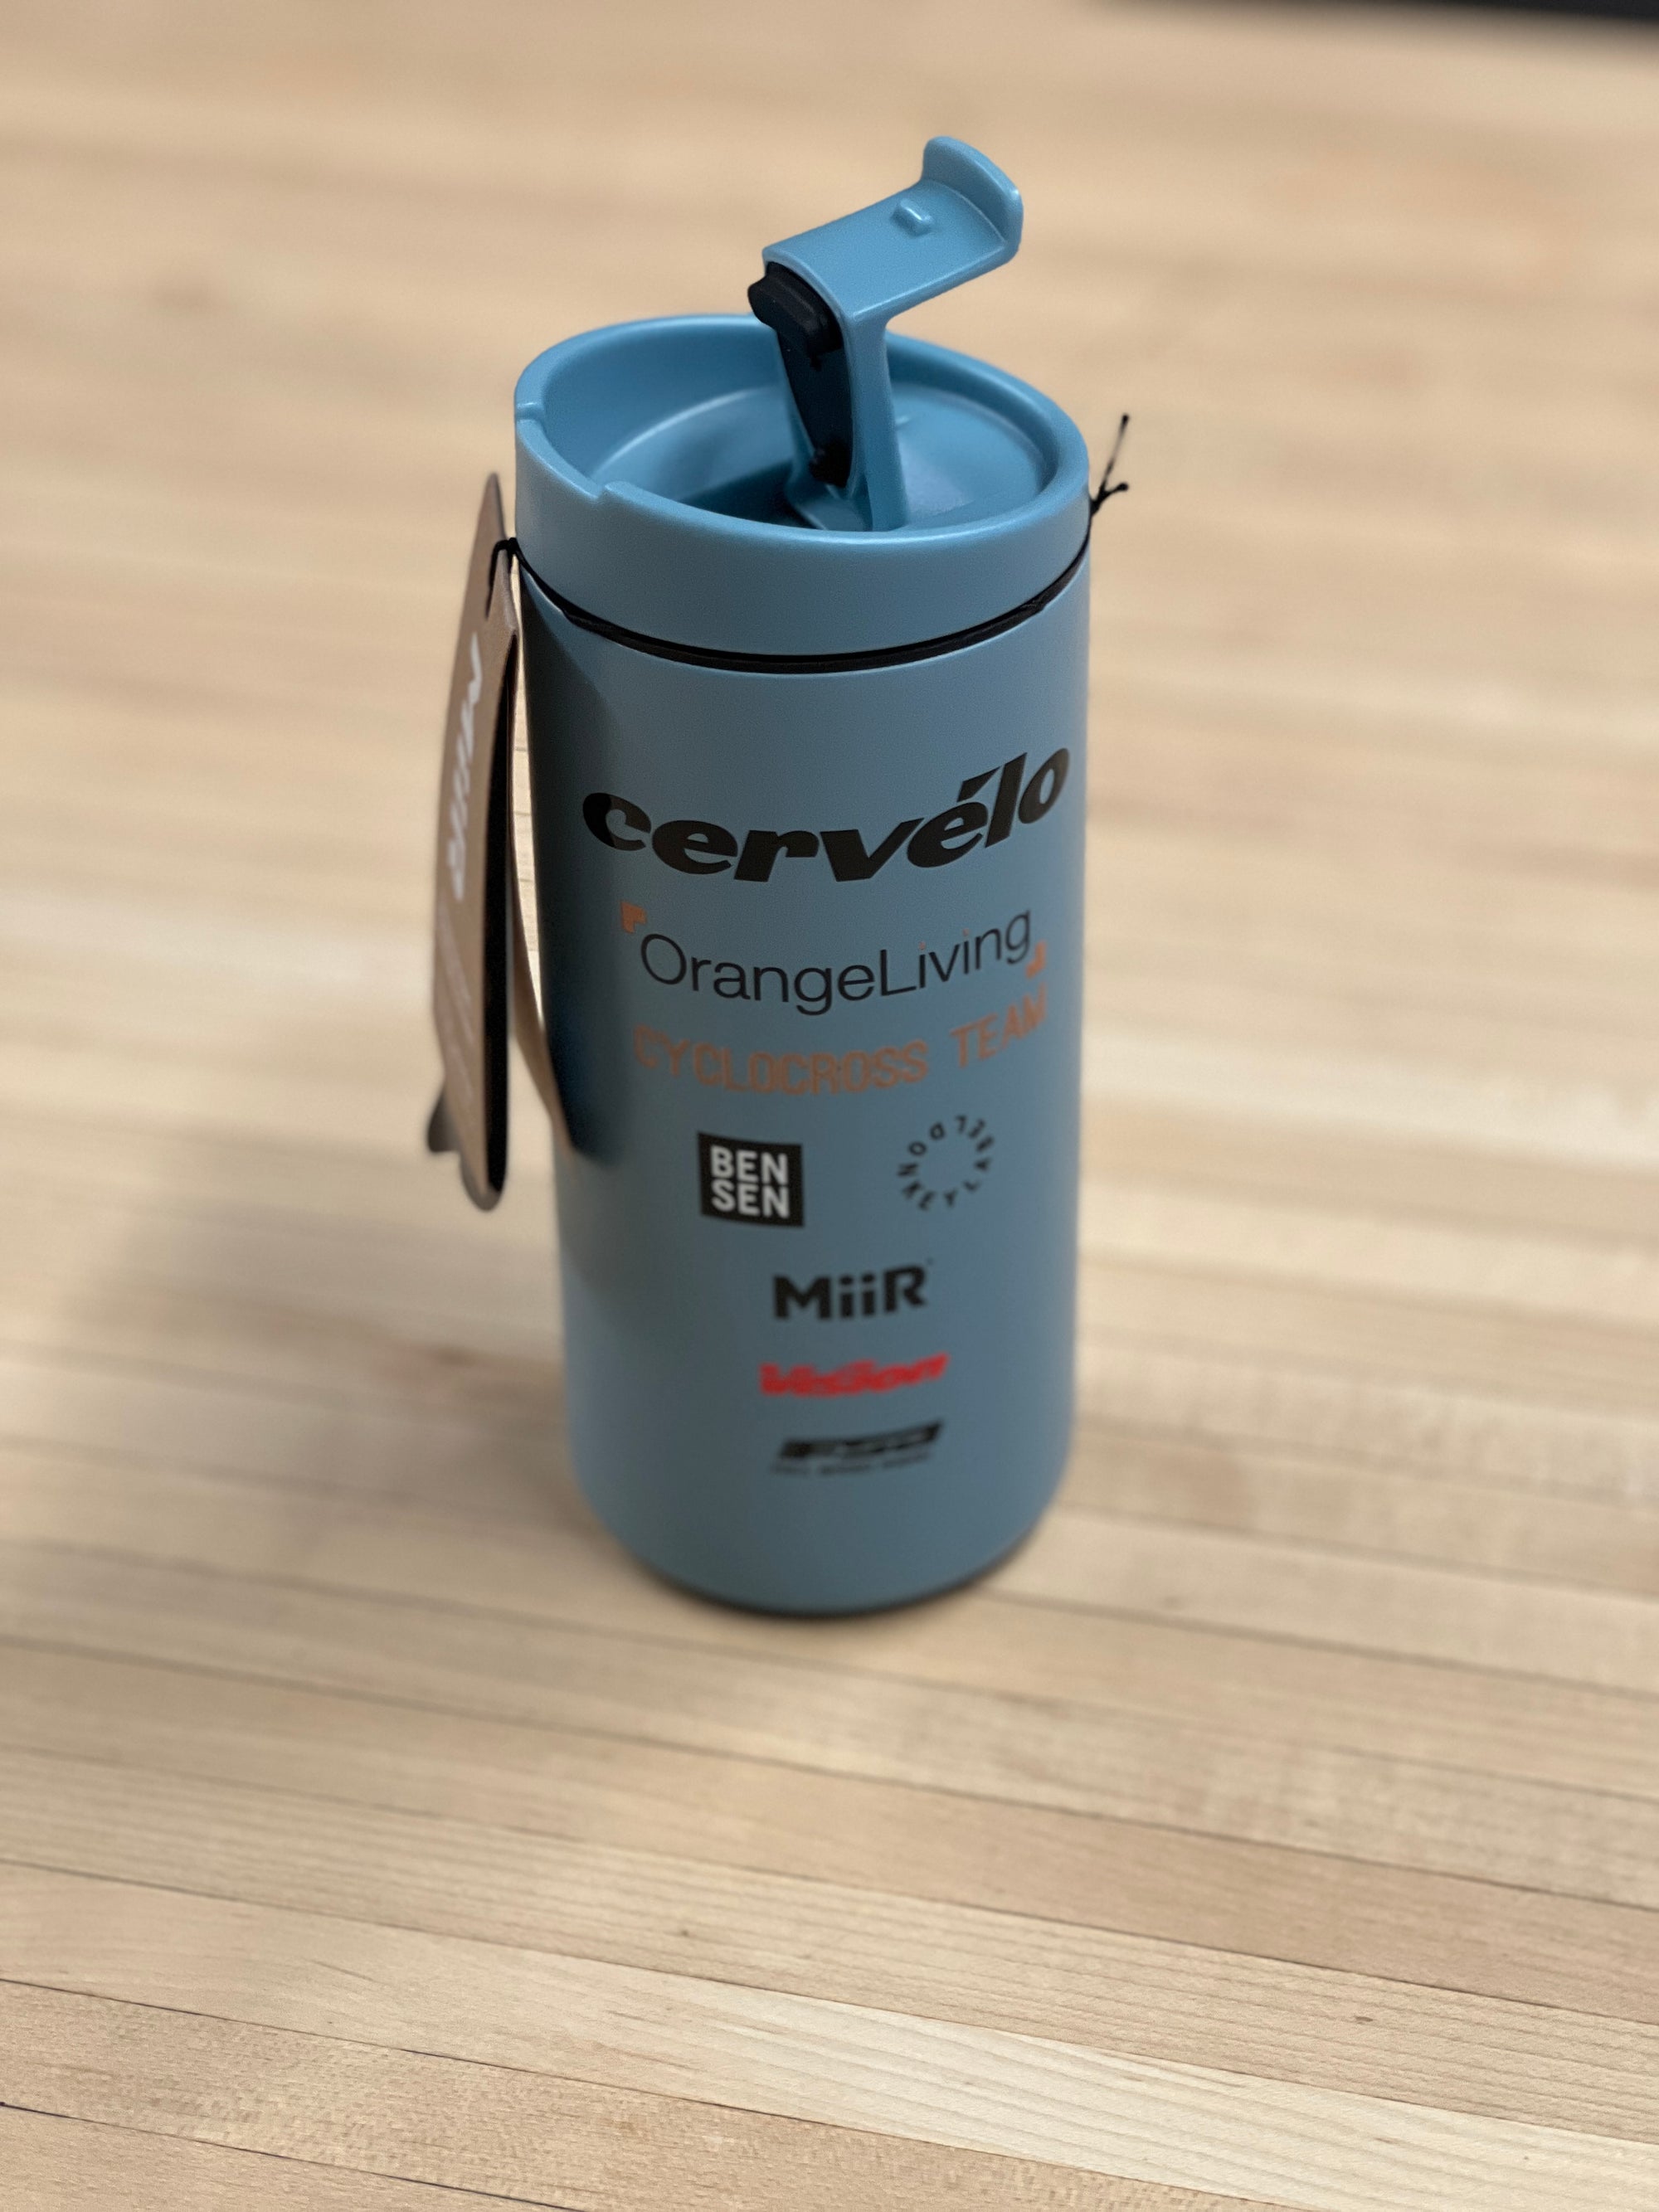 Miir - Cervelo OrangeLiving Coffee Traveler - 12 oz.